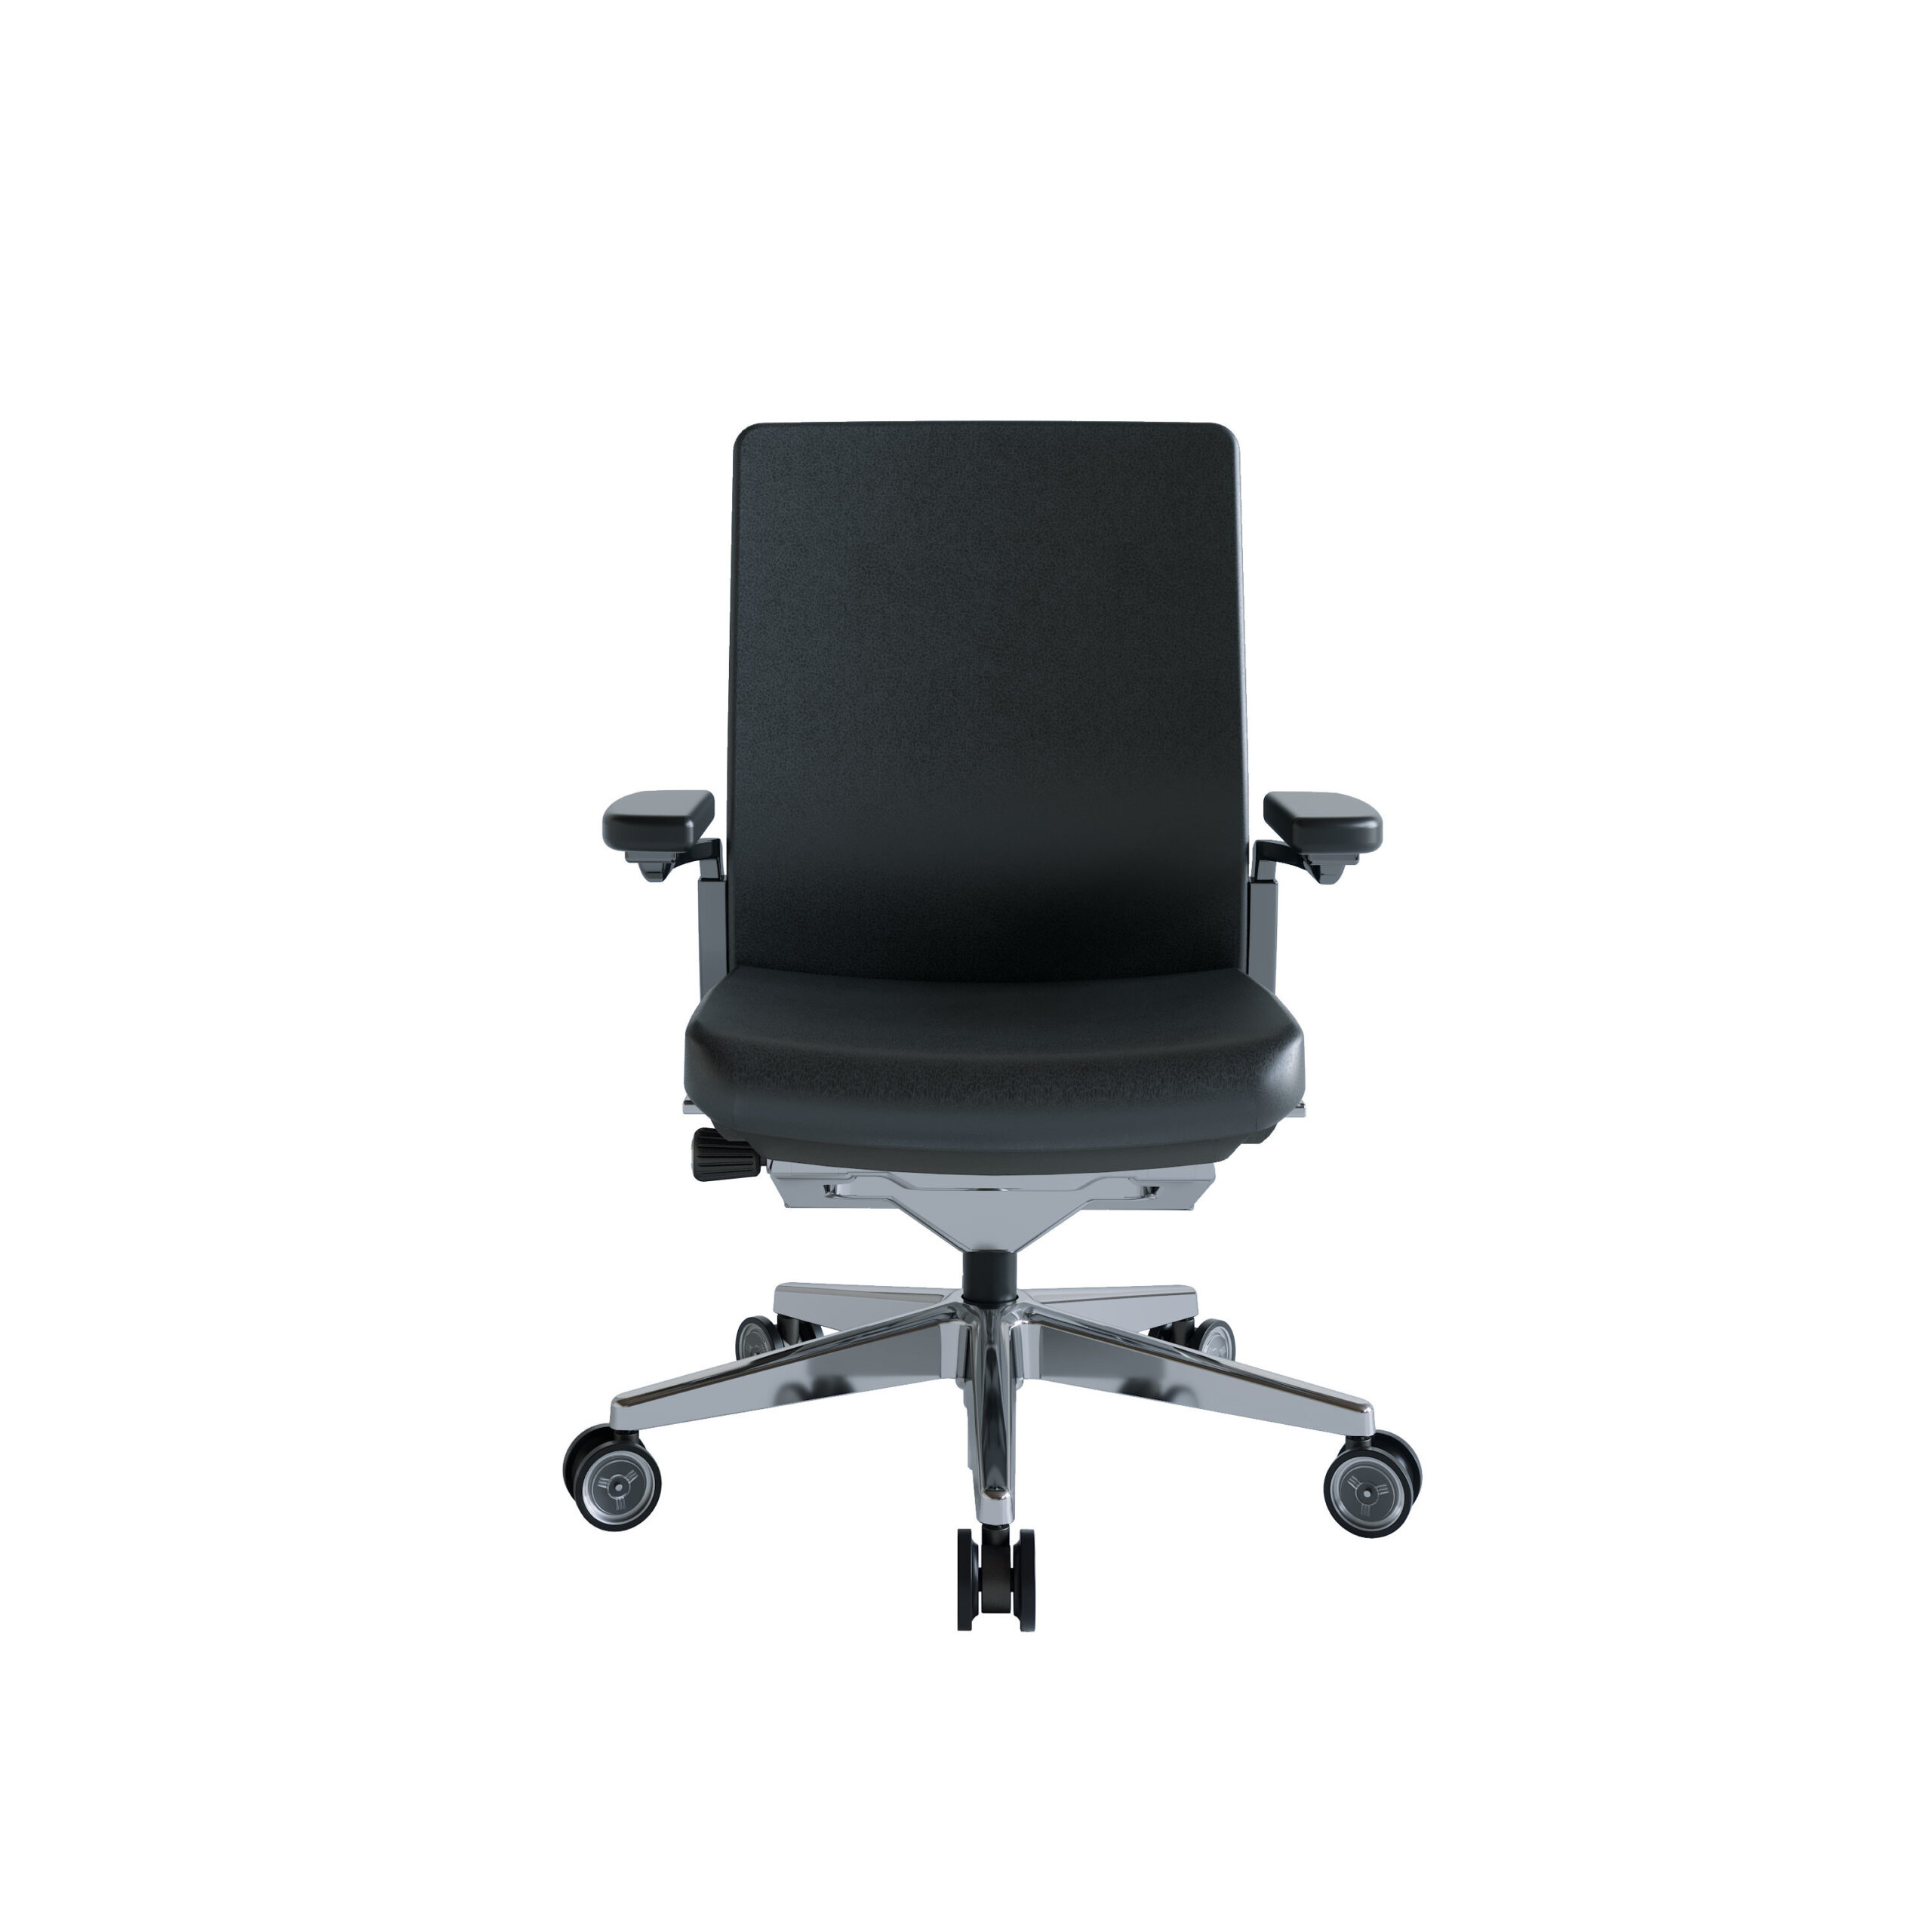 nlc-2020-a_0_Mikmaq_Office_Furniture-scaled-1.jpg